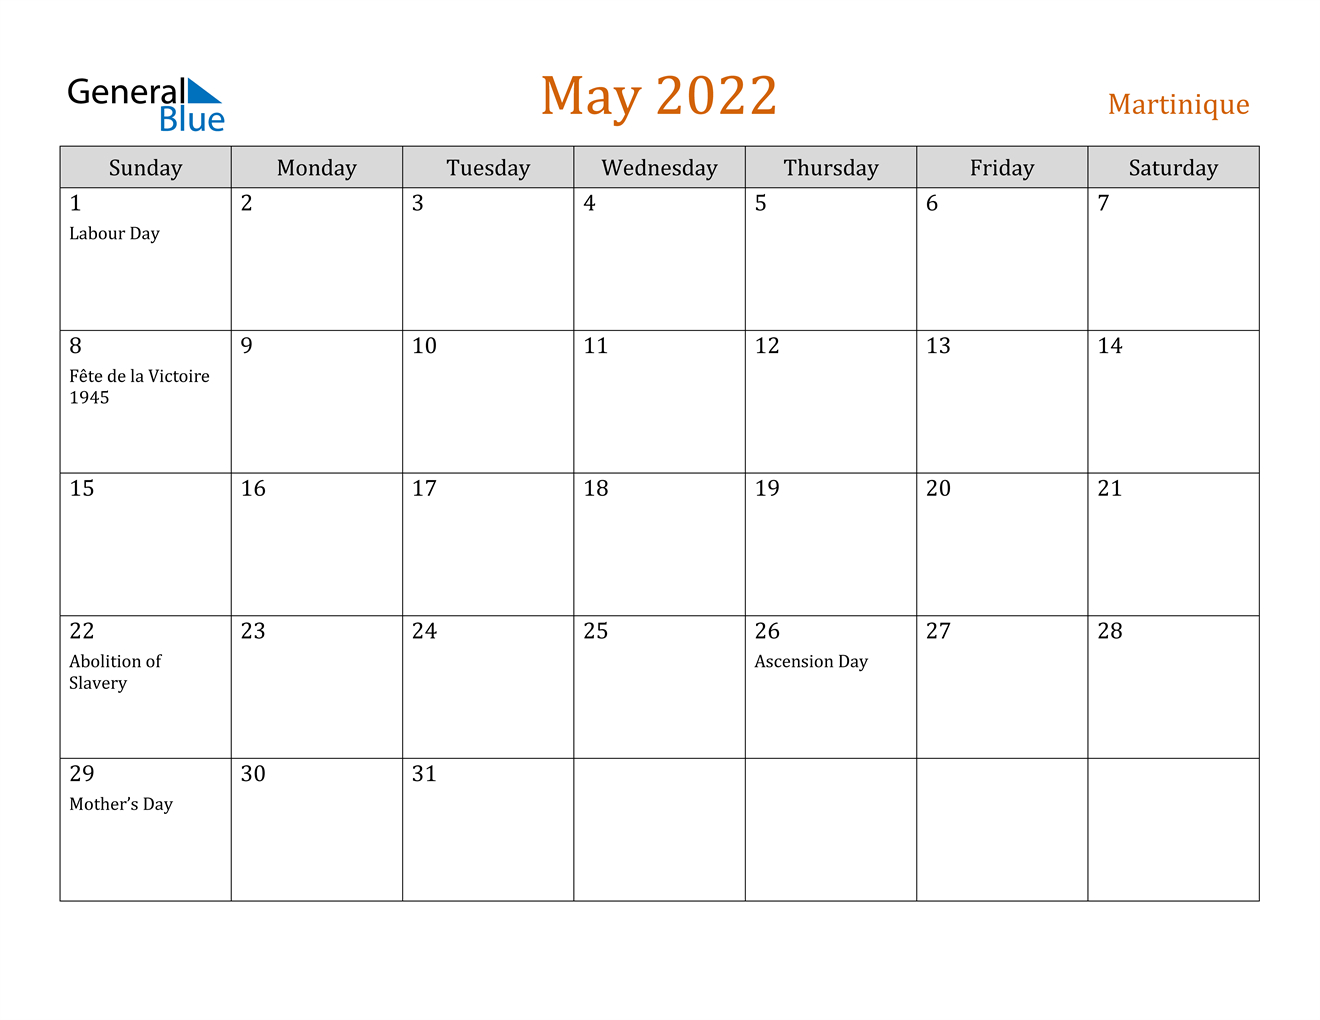 May 2022 Calendar - Martinique